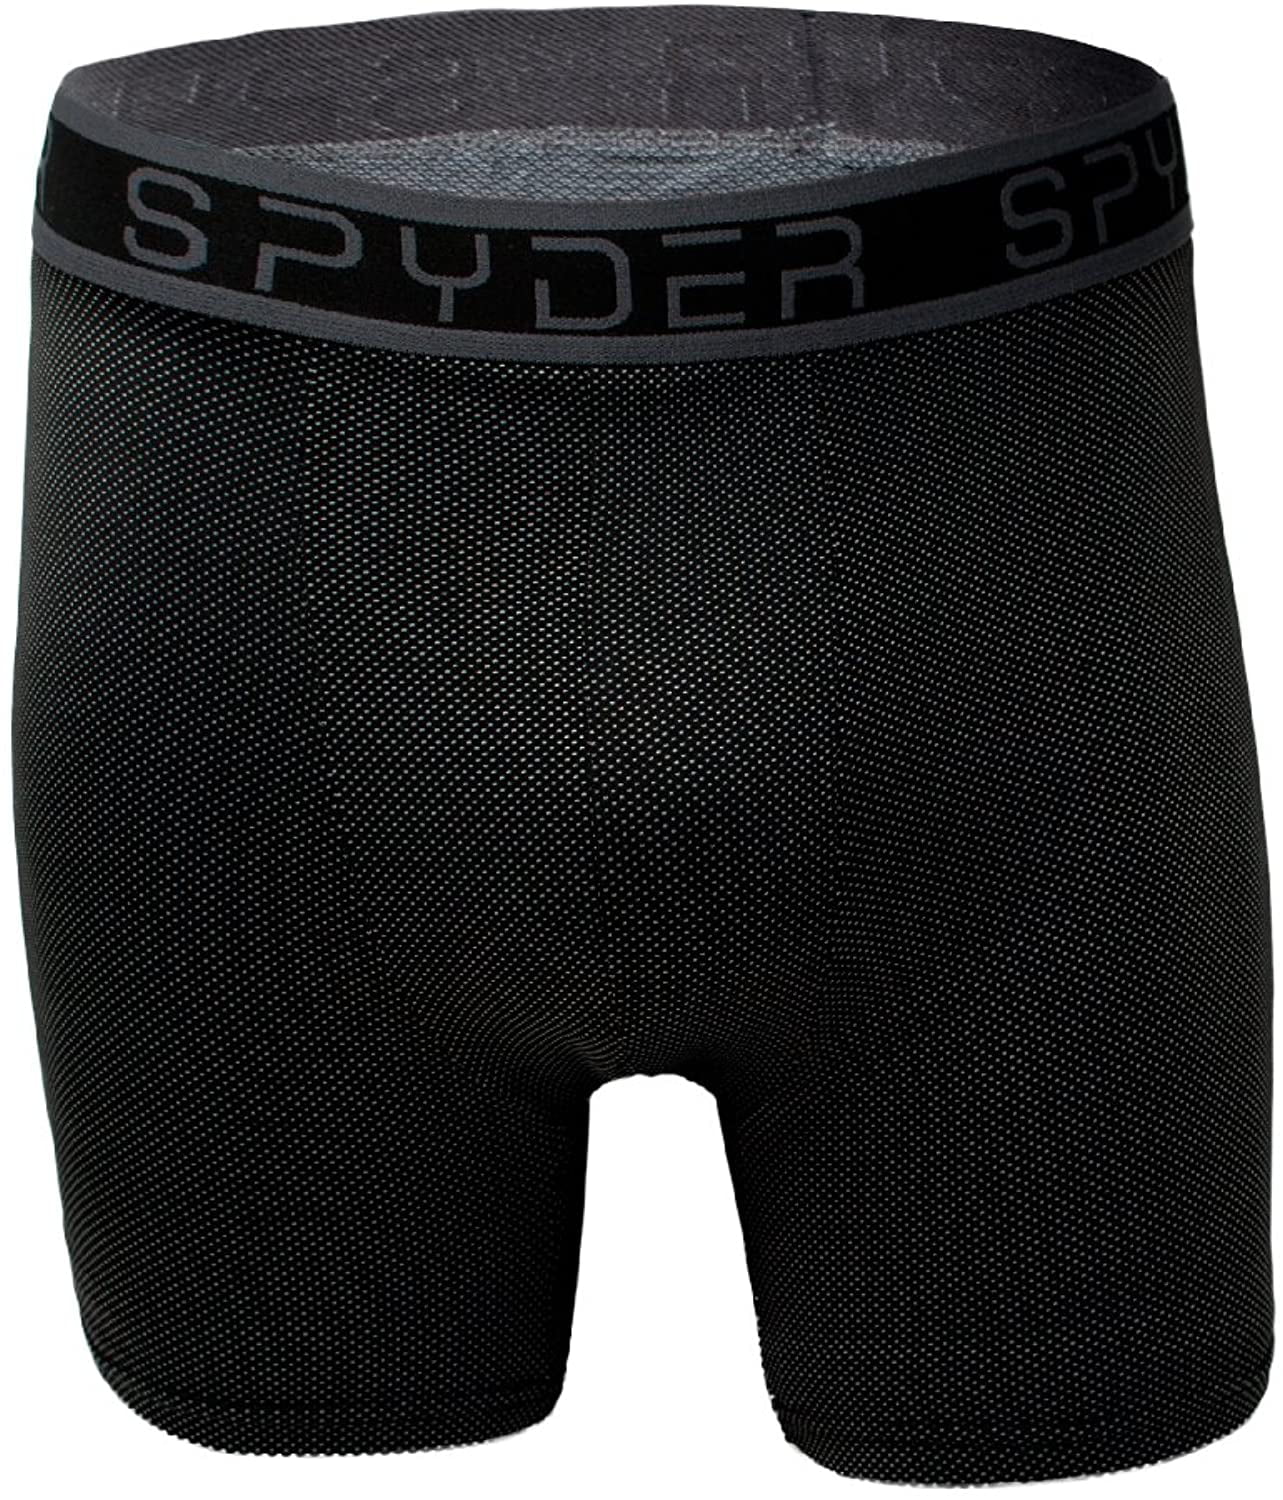 Spyder Performance Boxer Briefs NEW  Clothes design, Fashion, Plus fashion